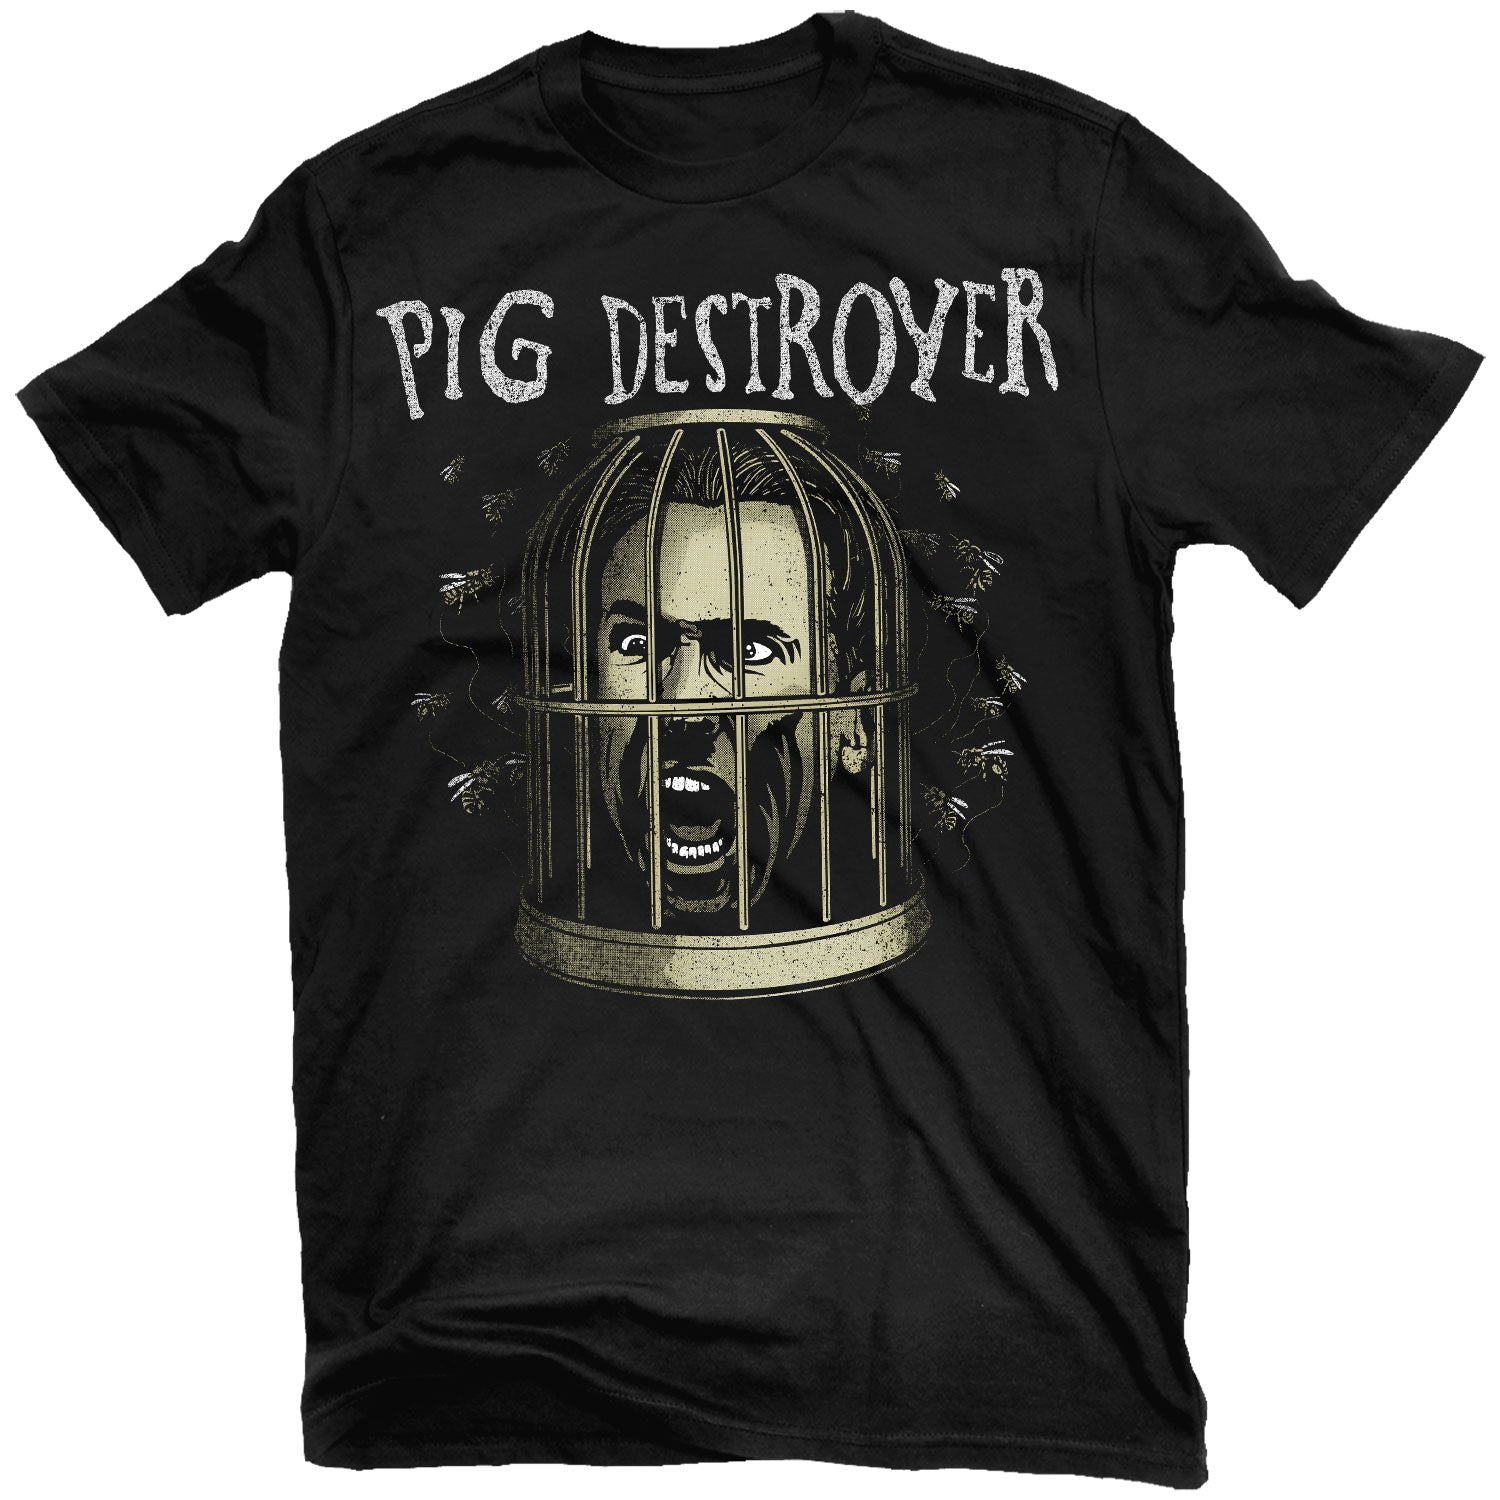 Pig Destroyer "Cage Head" T-Shirt